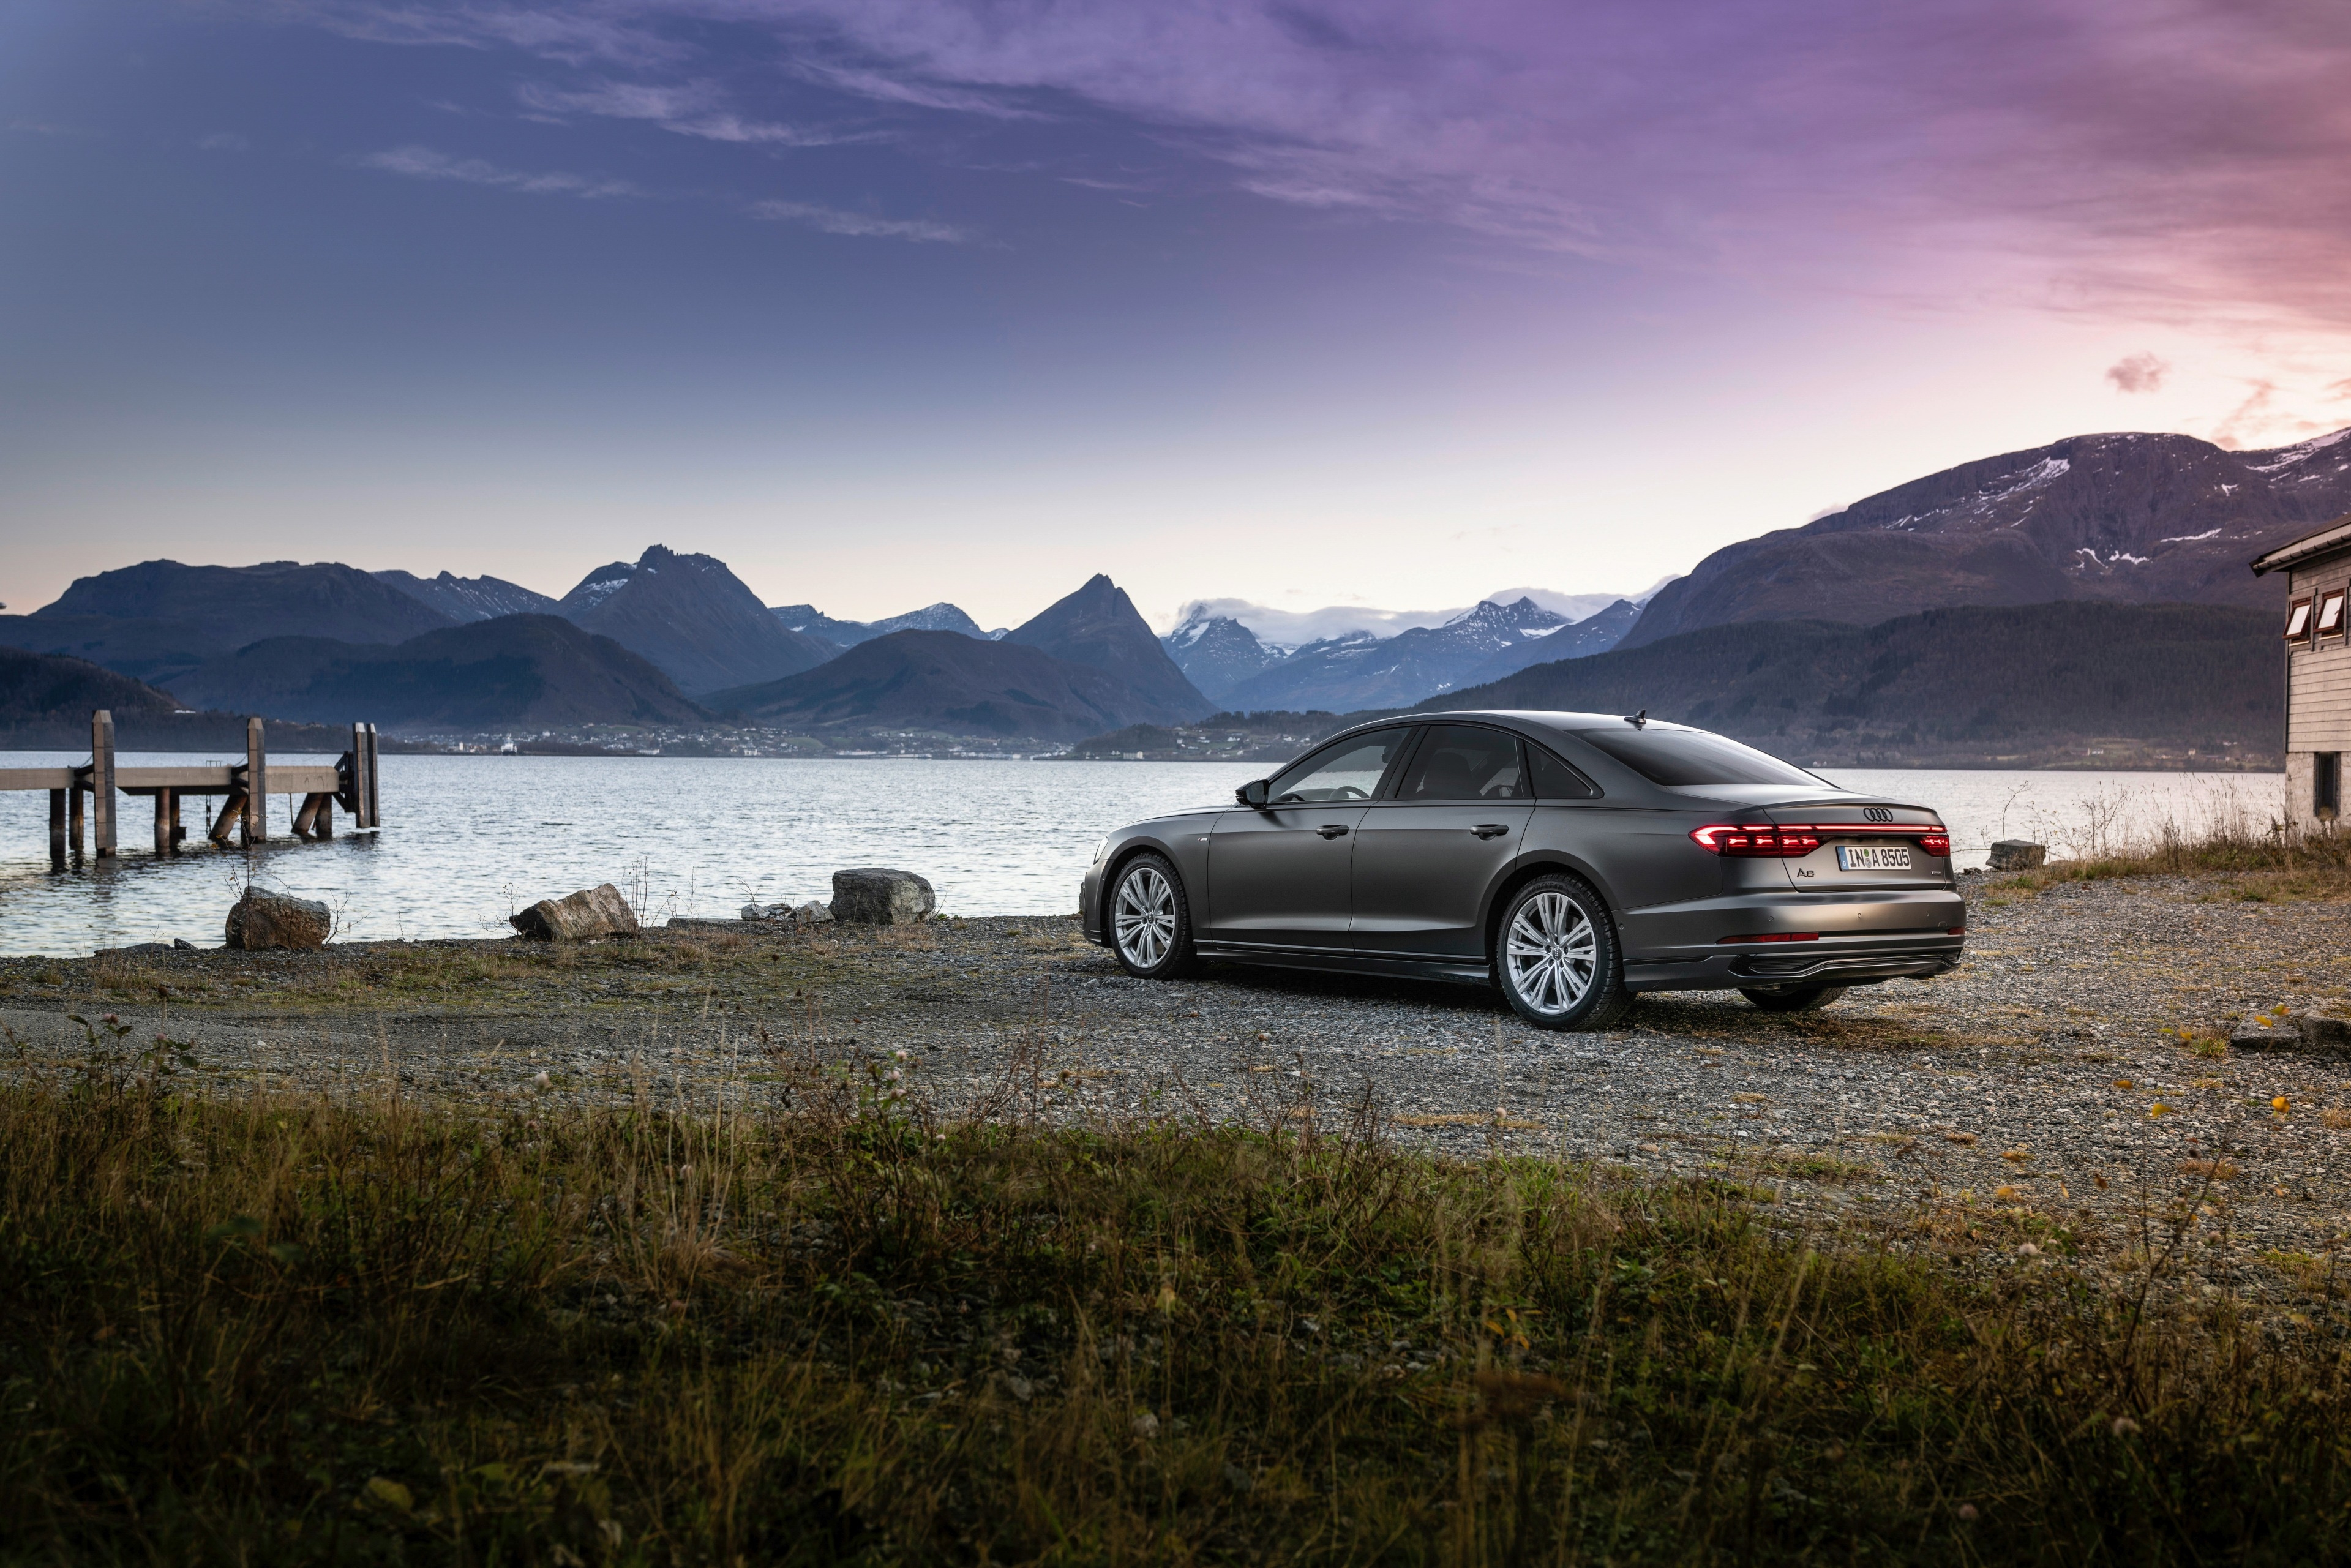 Audi HD Wallpapers | 4K Backgrounds - Wallpapers Den